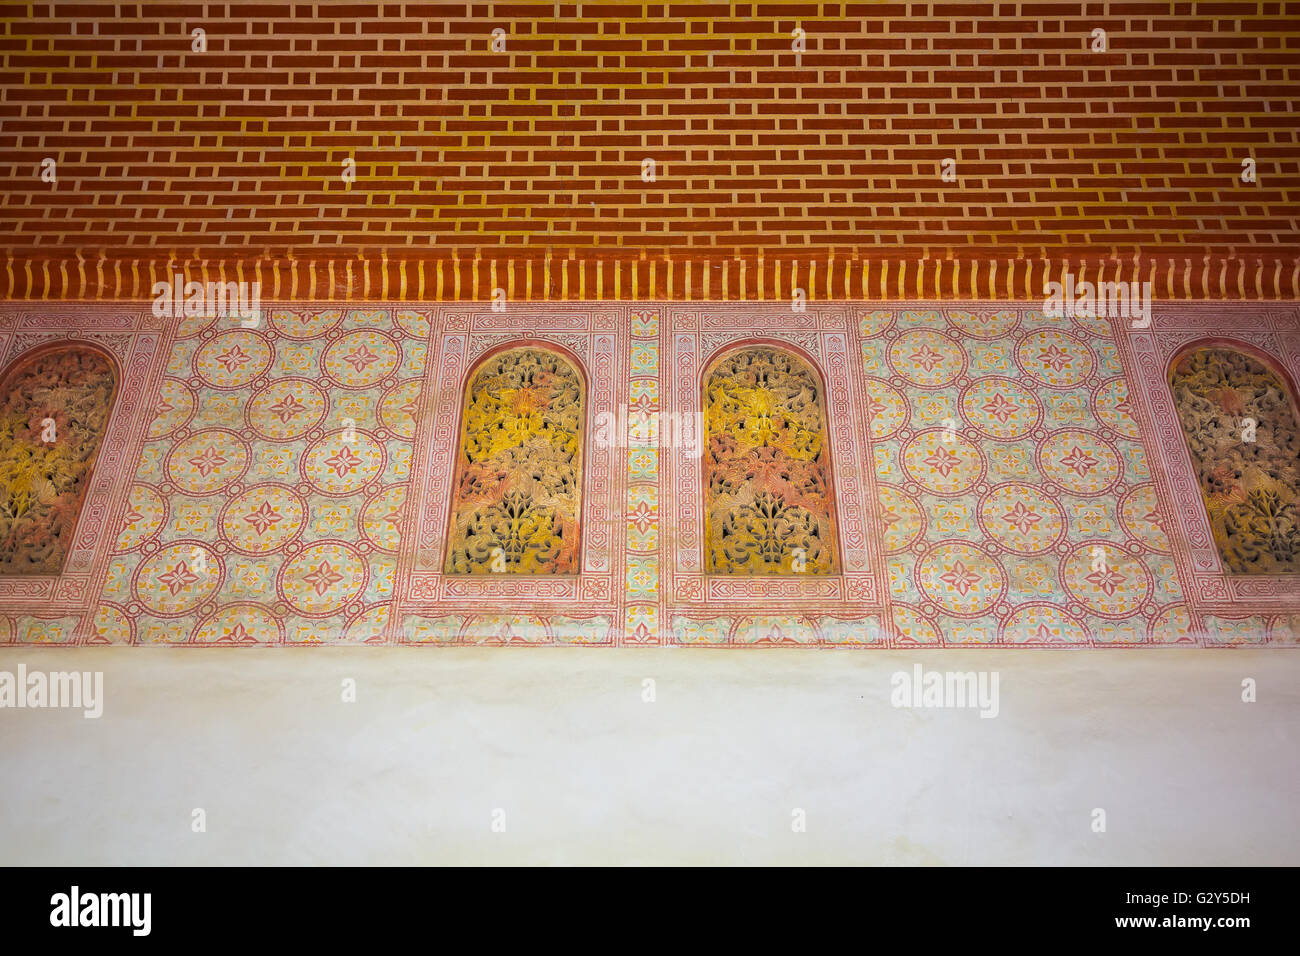 decken dekoriert in den berühmten Palast der Alcazaba in Malaga Spanien Stockfoto